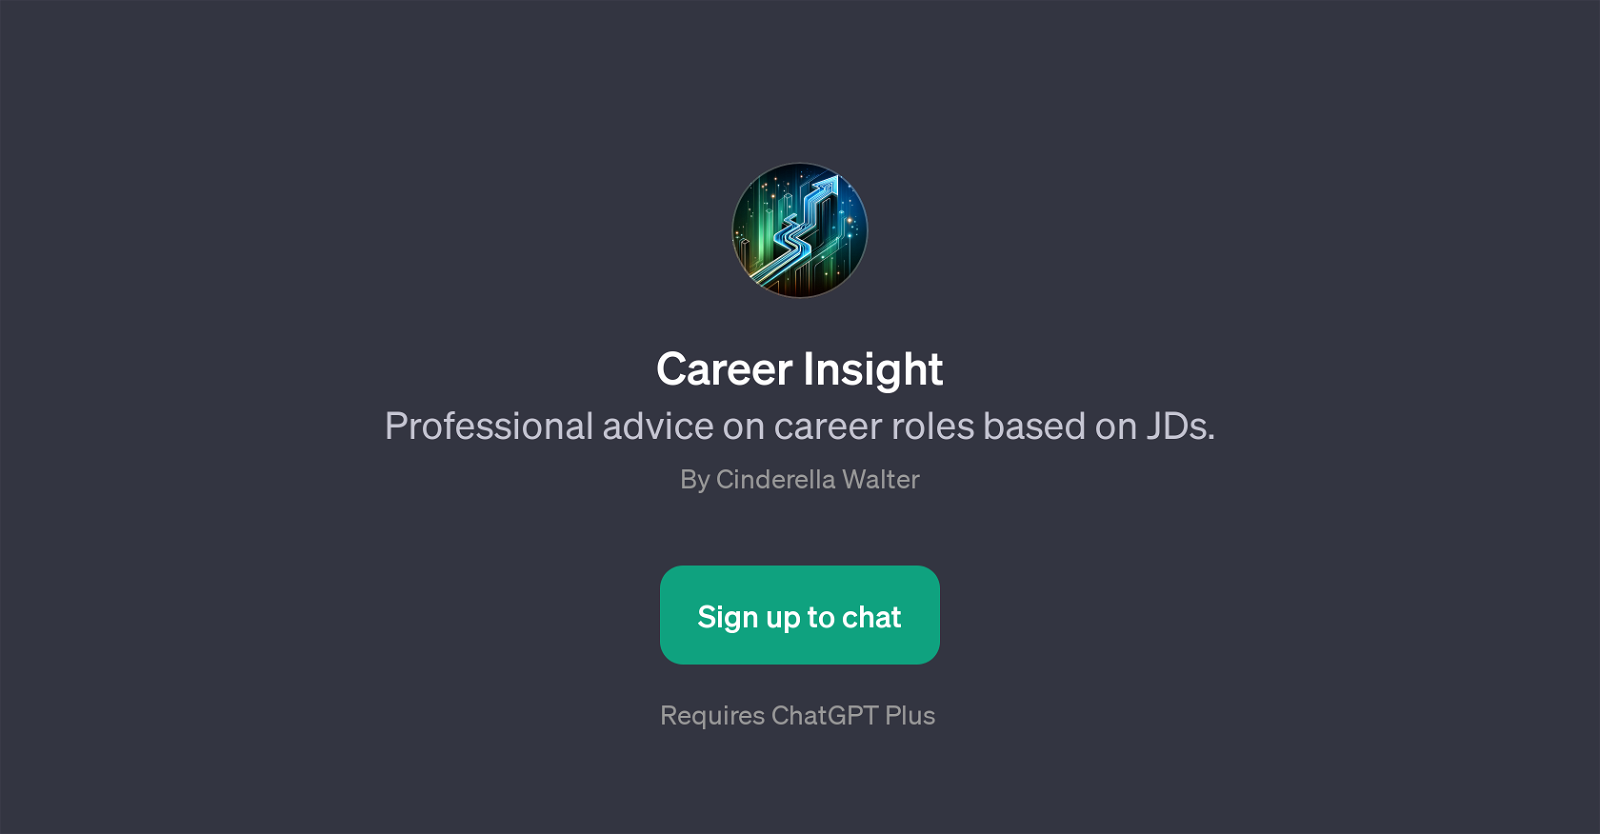 Career Insight website